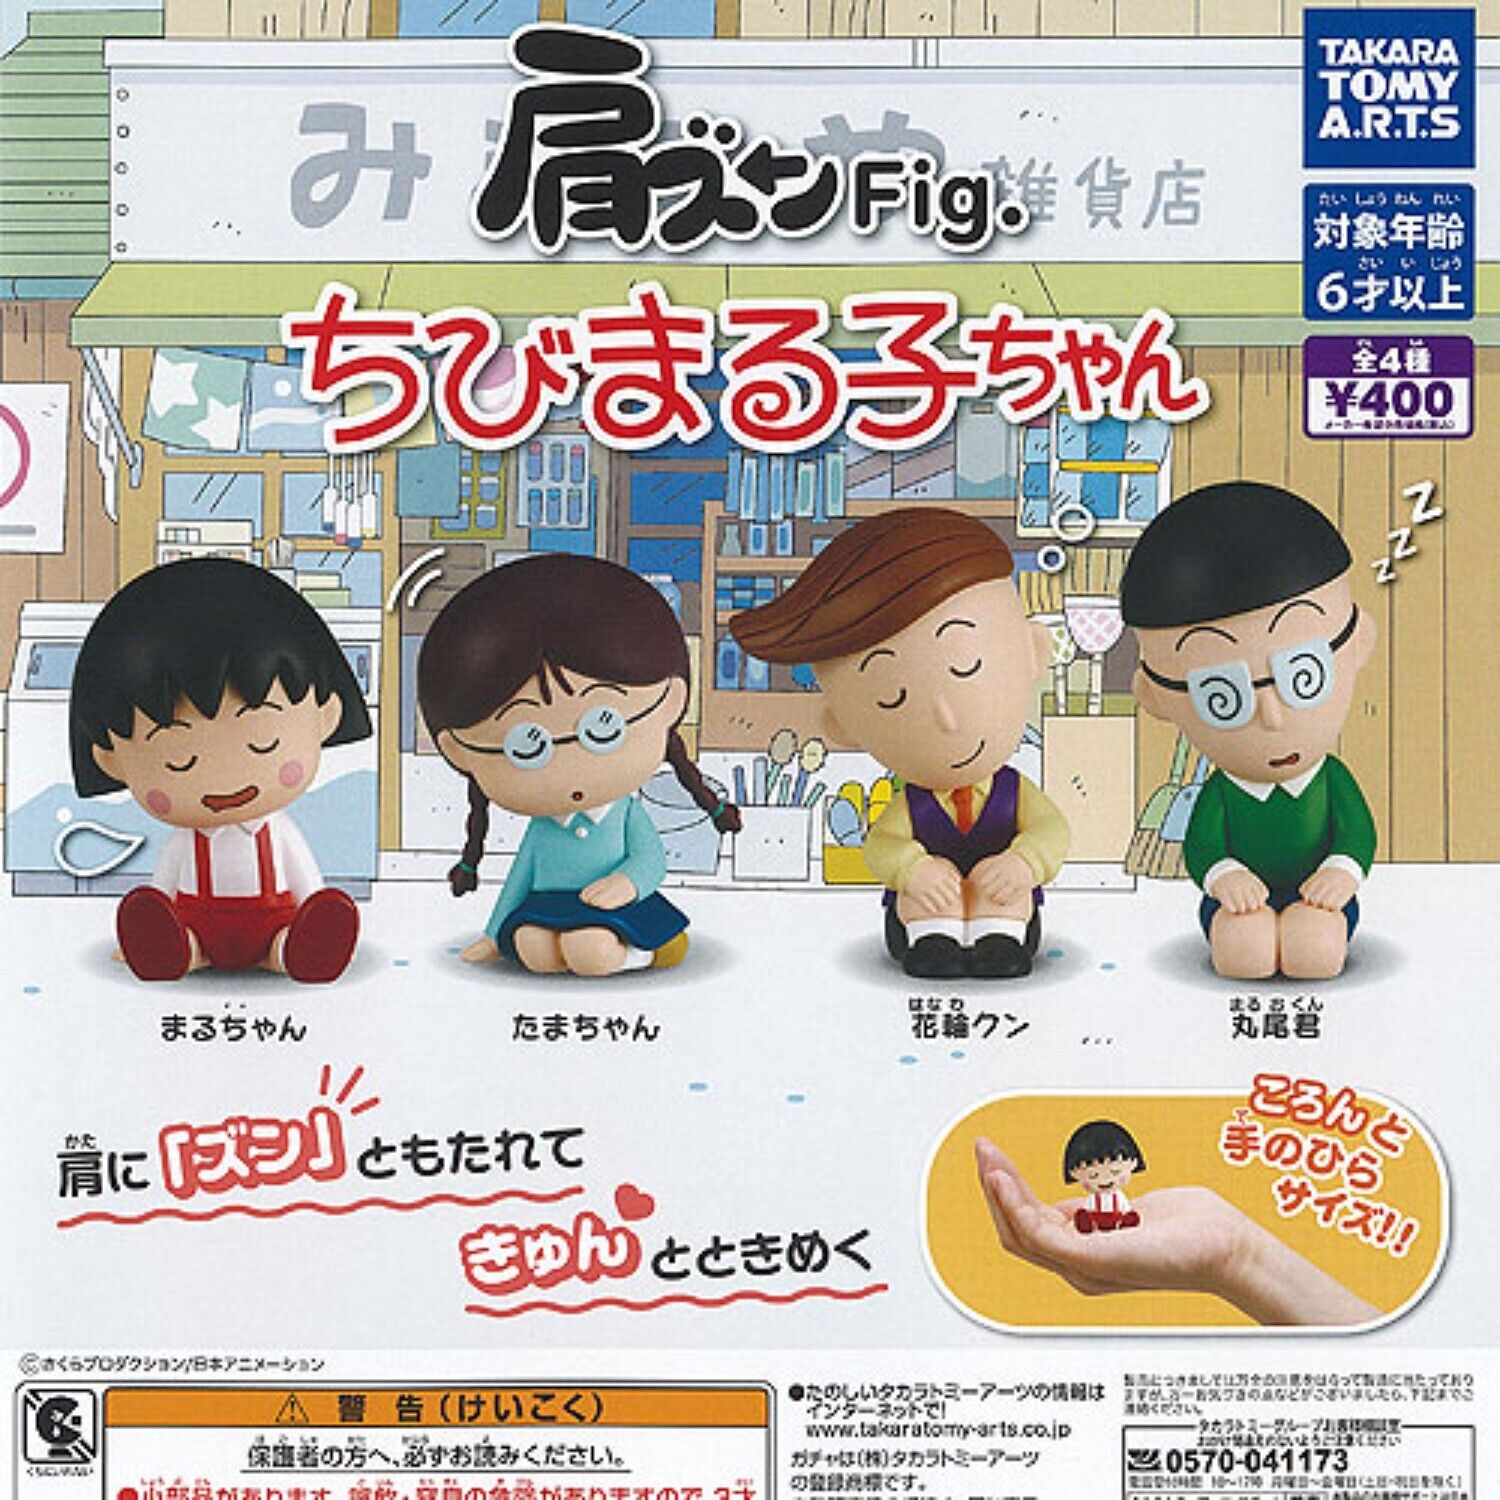 Shoulder Zun Fig. Chibi Maruko-chan Capsule Toy 4 Types Full Comp Set Gacha New